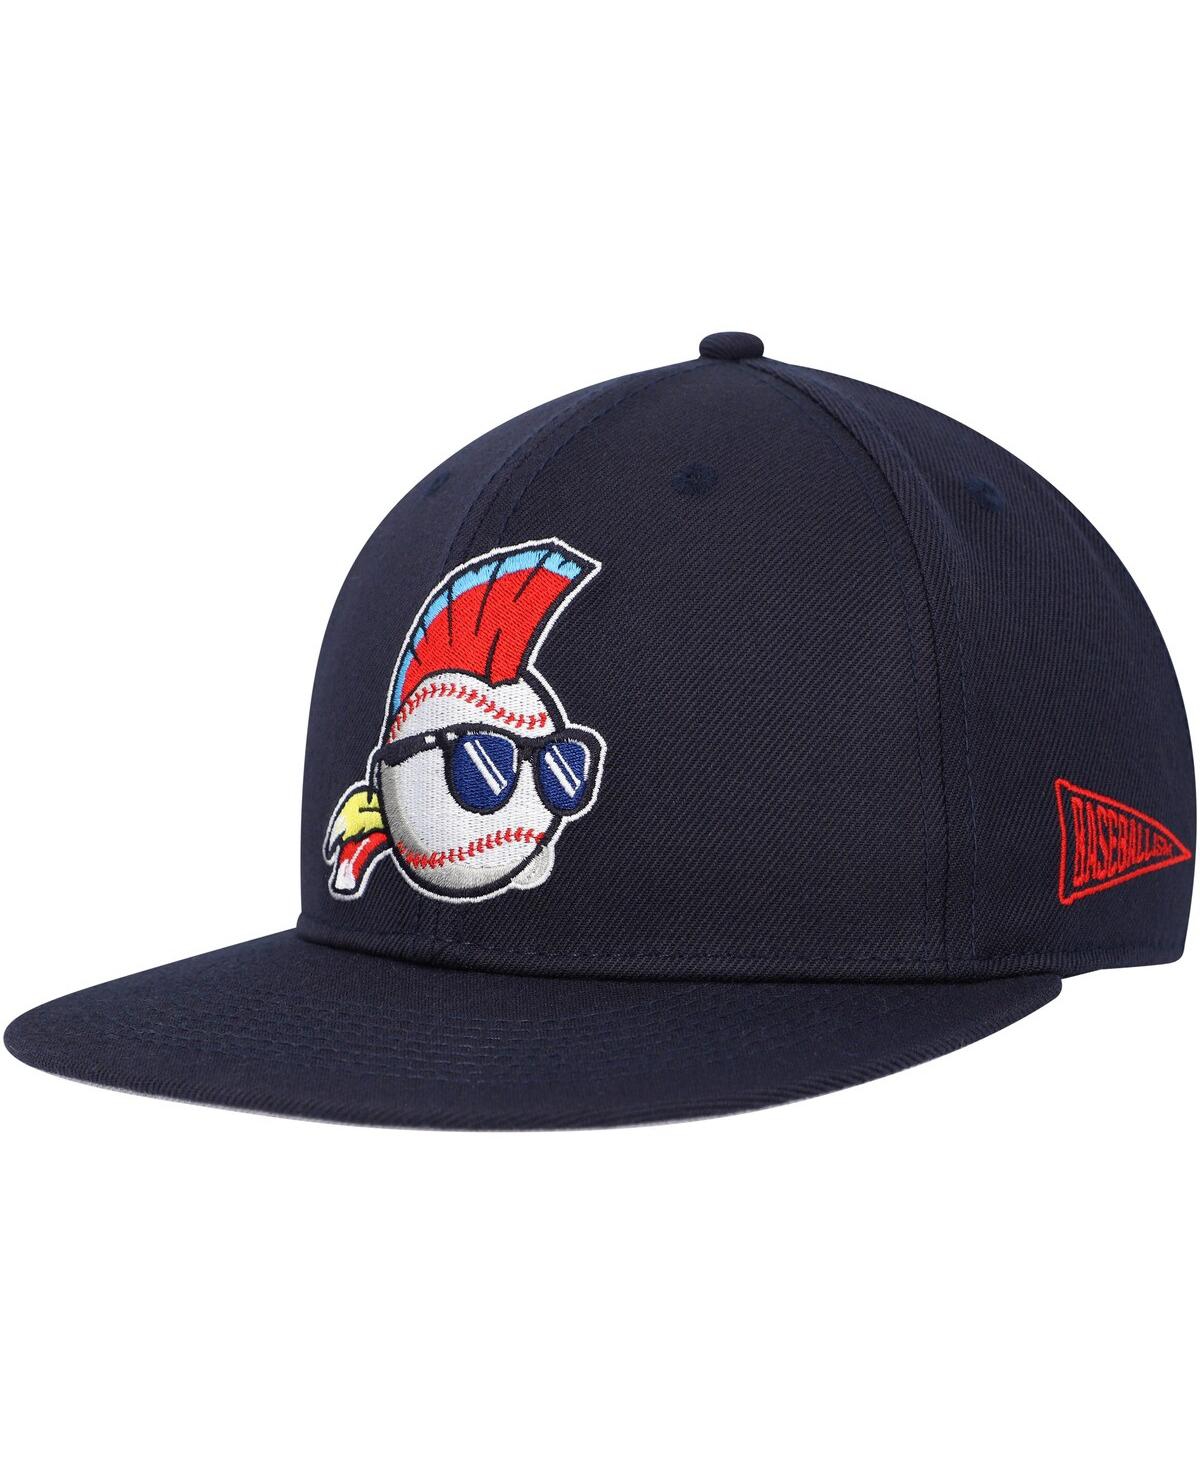 Men's Baseballism Navy Major League Snapback Hat - Navy